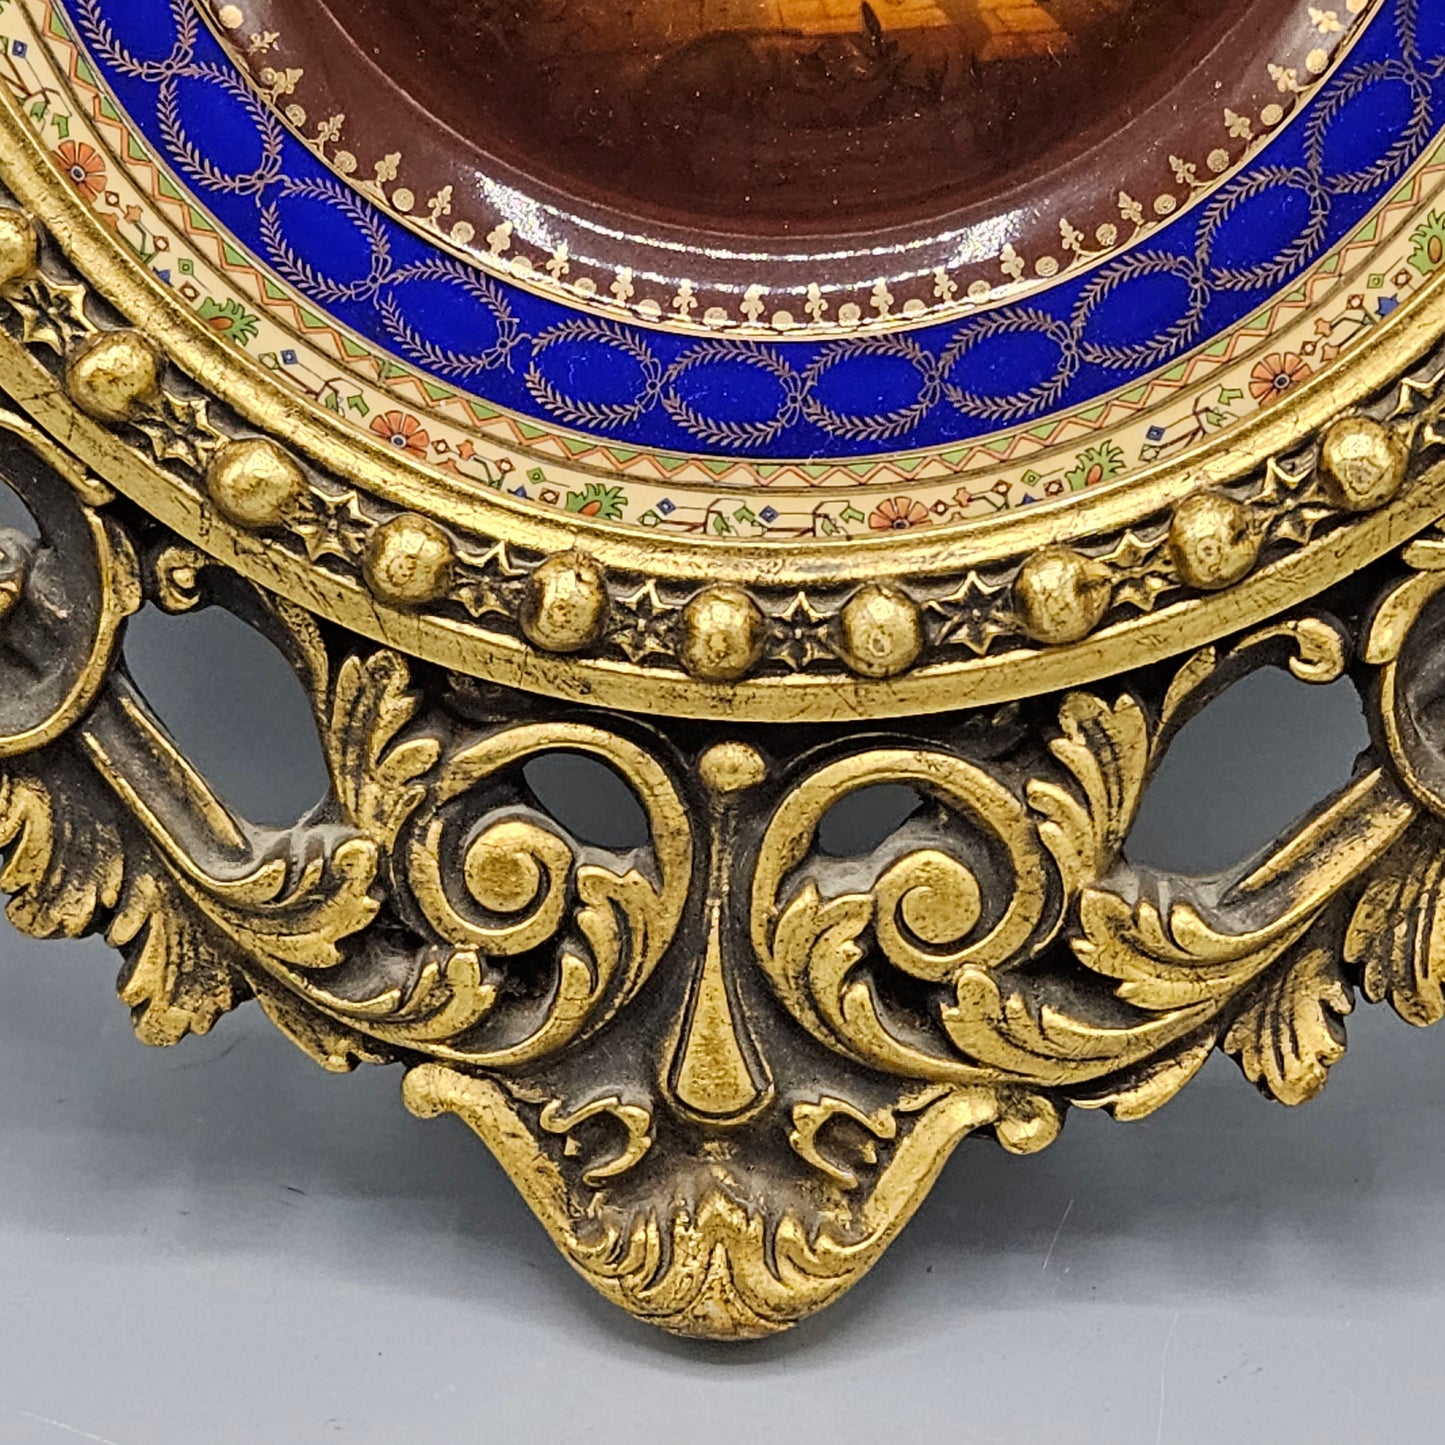 European Porcelain Plate in Elaborate Gilt Frame